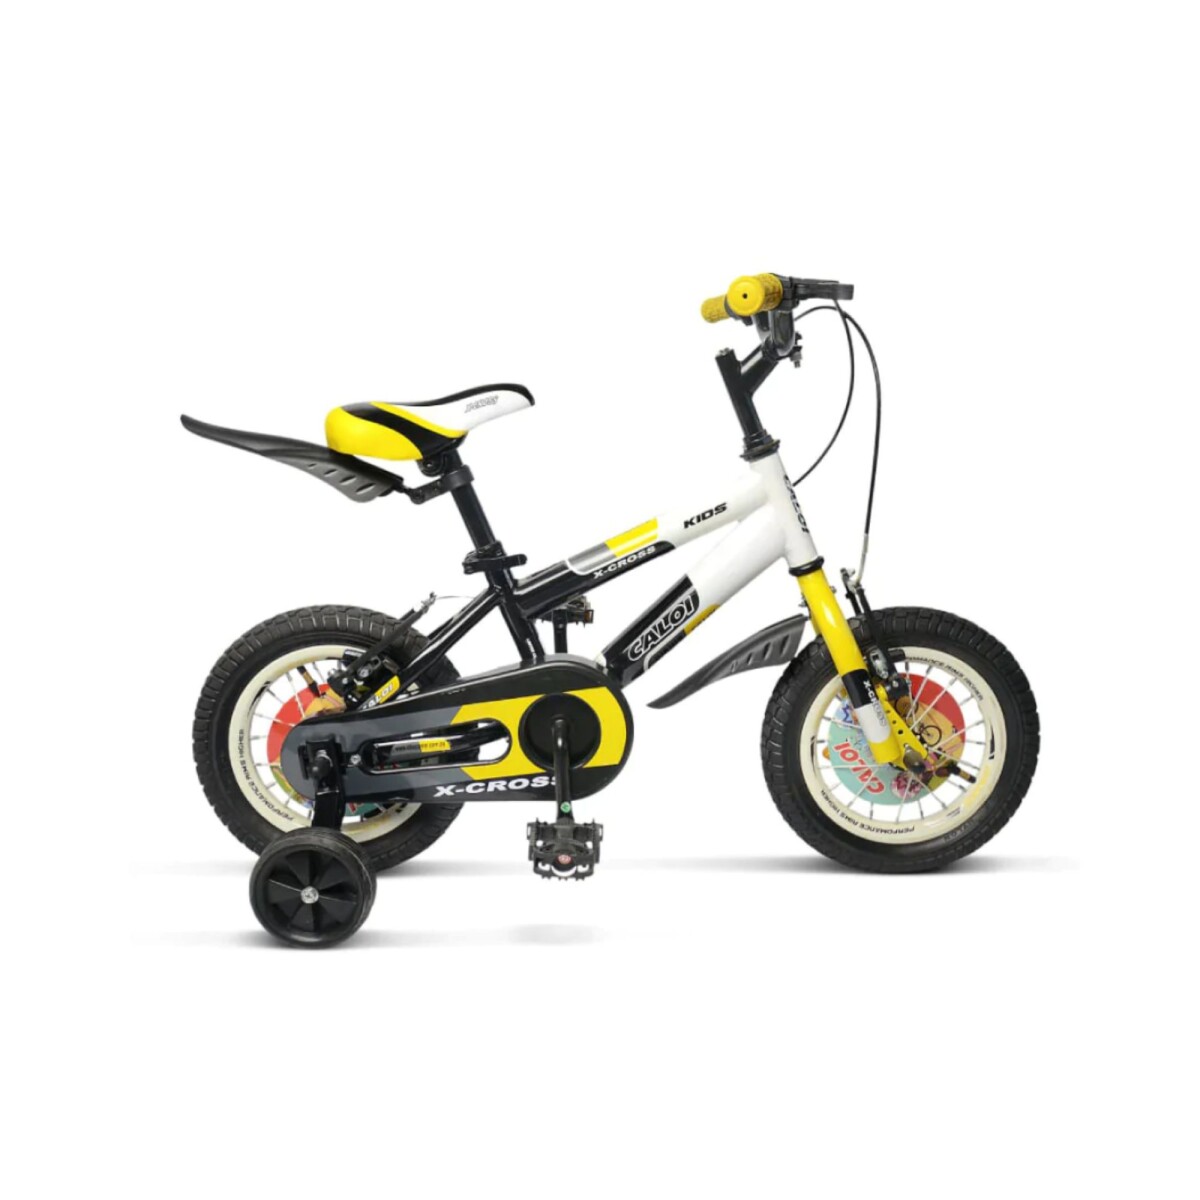 Bicicleta Caloi X-CROSS 12" - Amarillo 